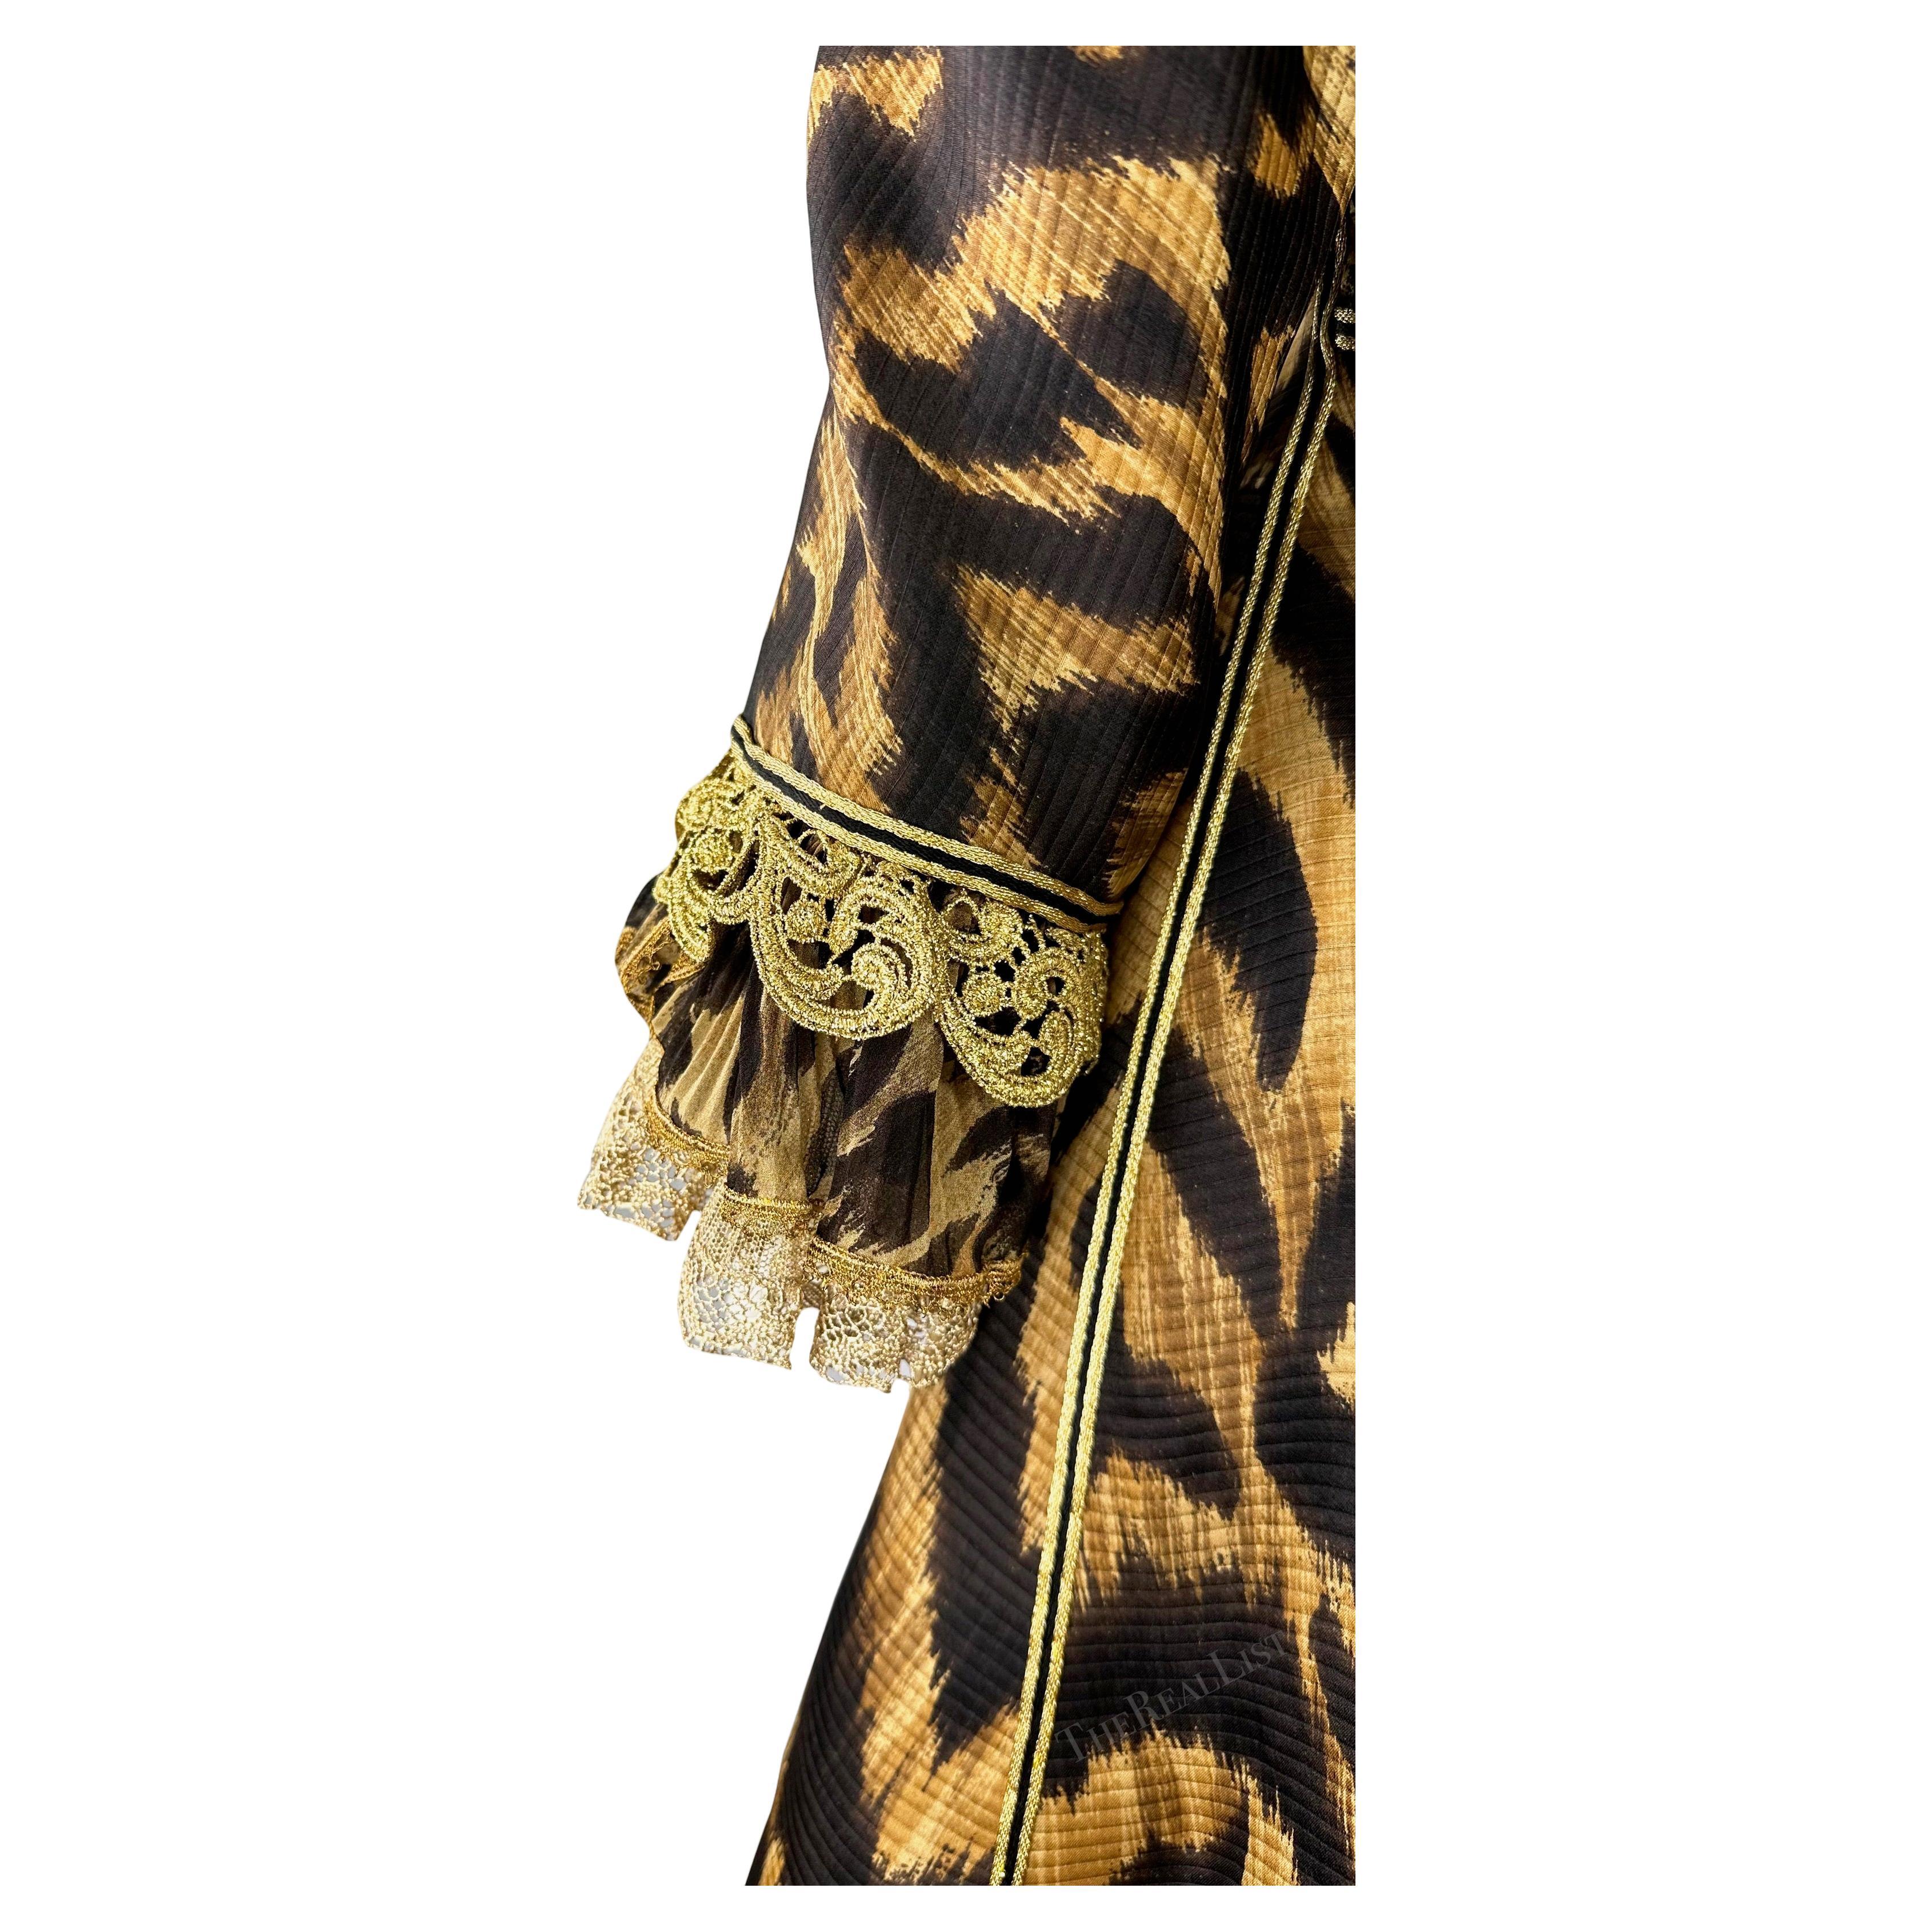 S/S 1992 Atelier Versace Haute Couture Runway Leopard Silk Gold Lace Coat Dress For Sale 7